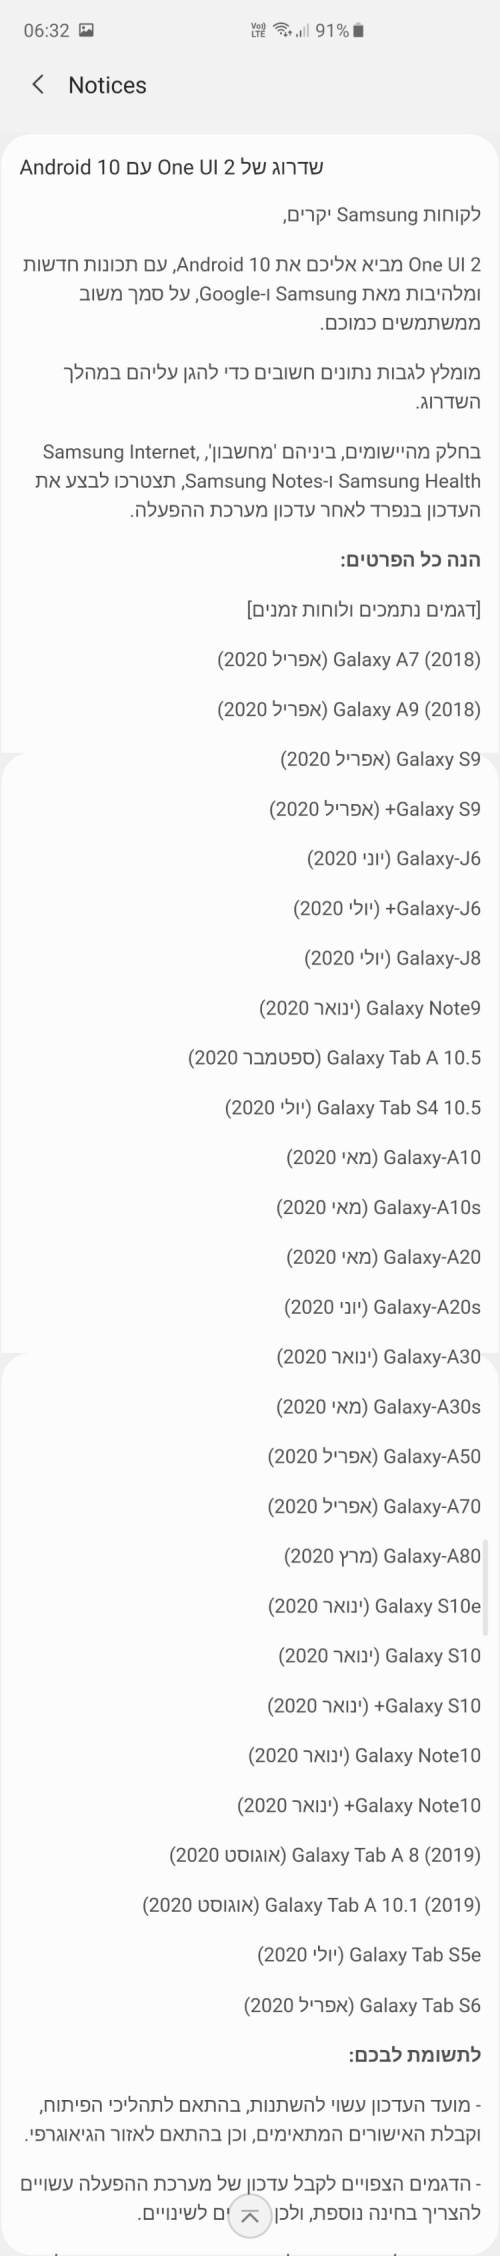 Samsung Israel Android 10 aktualizacje harmonogram